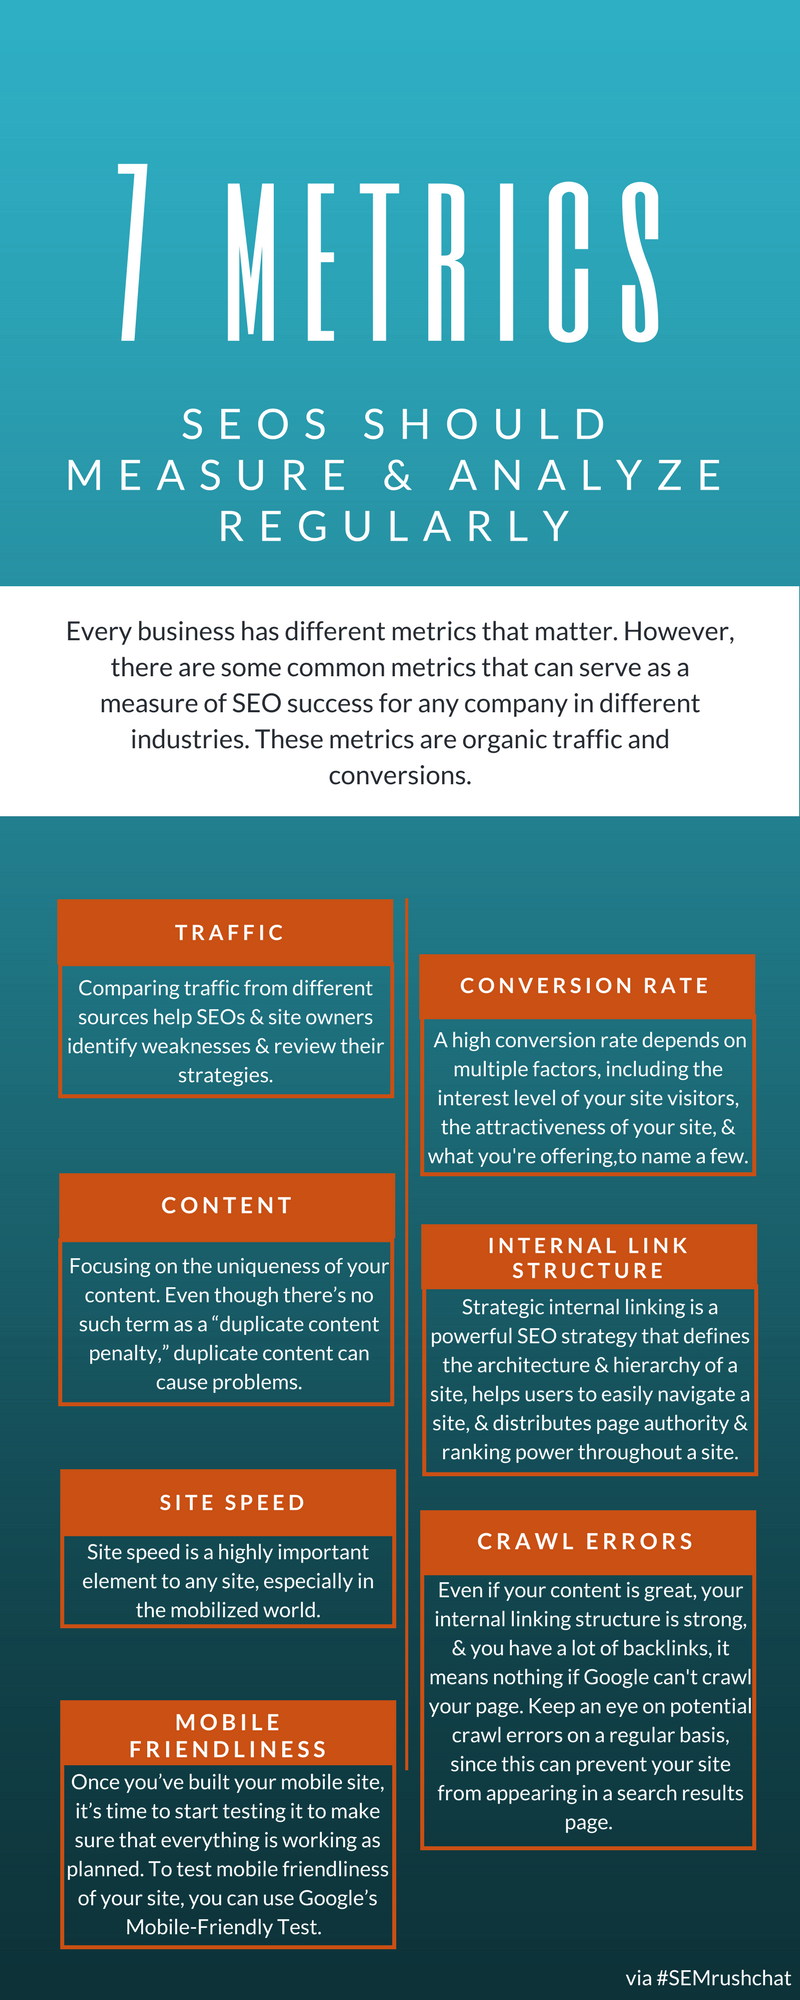 7-metrics-seos-should-measure-and-analyze-regularly.png